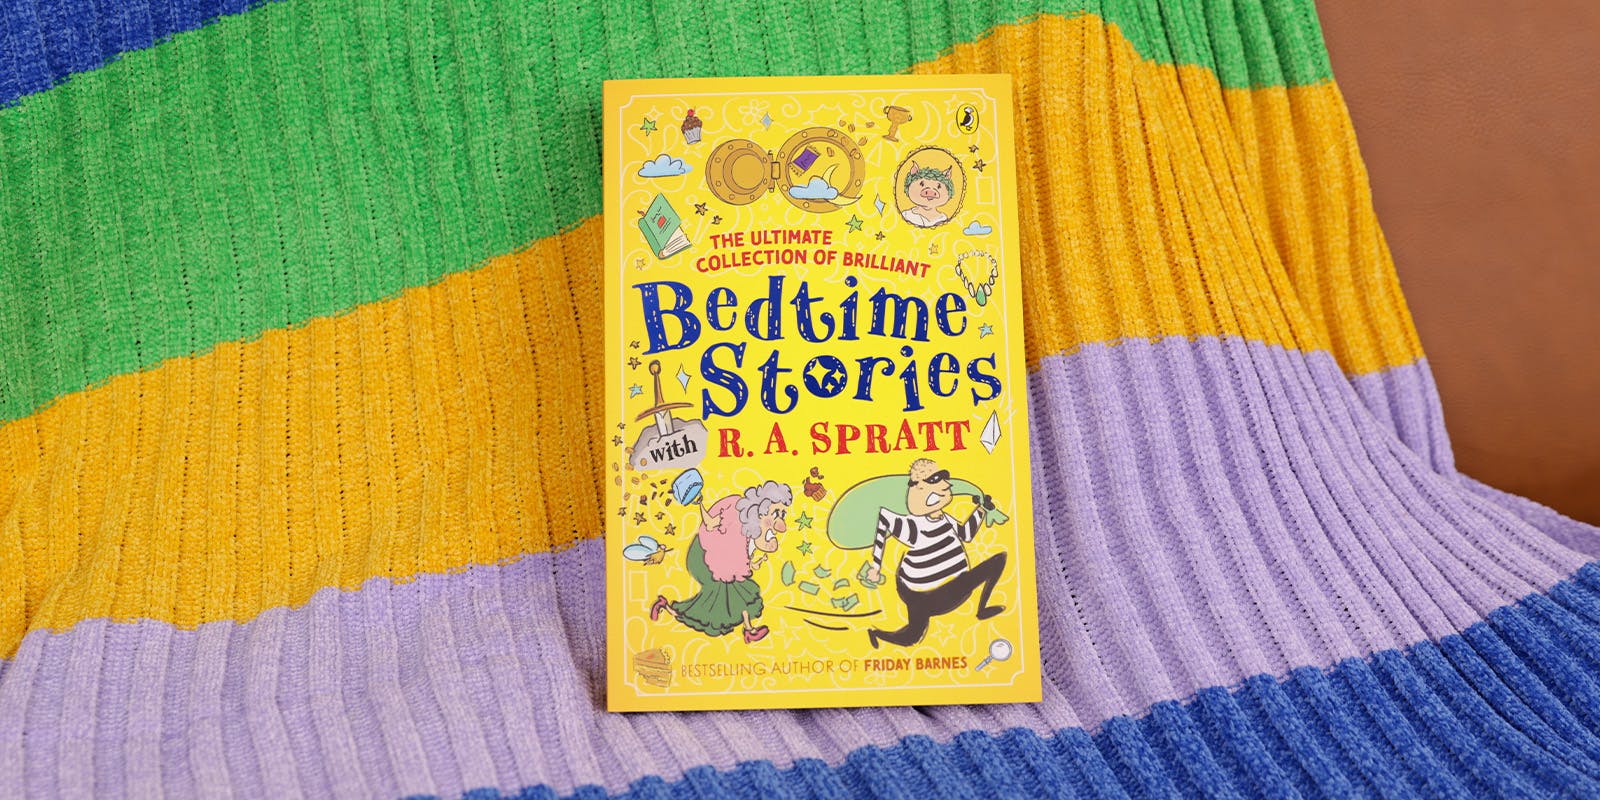 R.A. Spratt’s Bedtime Stories podcast surpasses 3-million download milestone